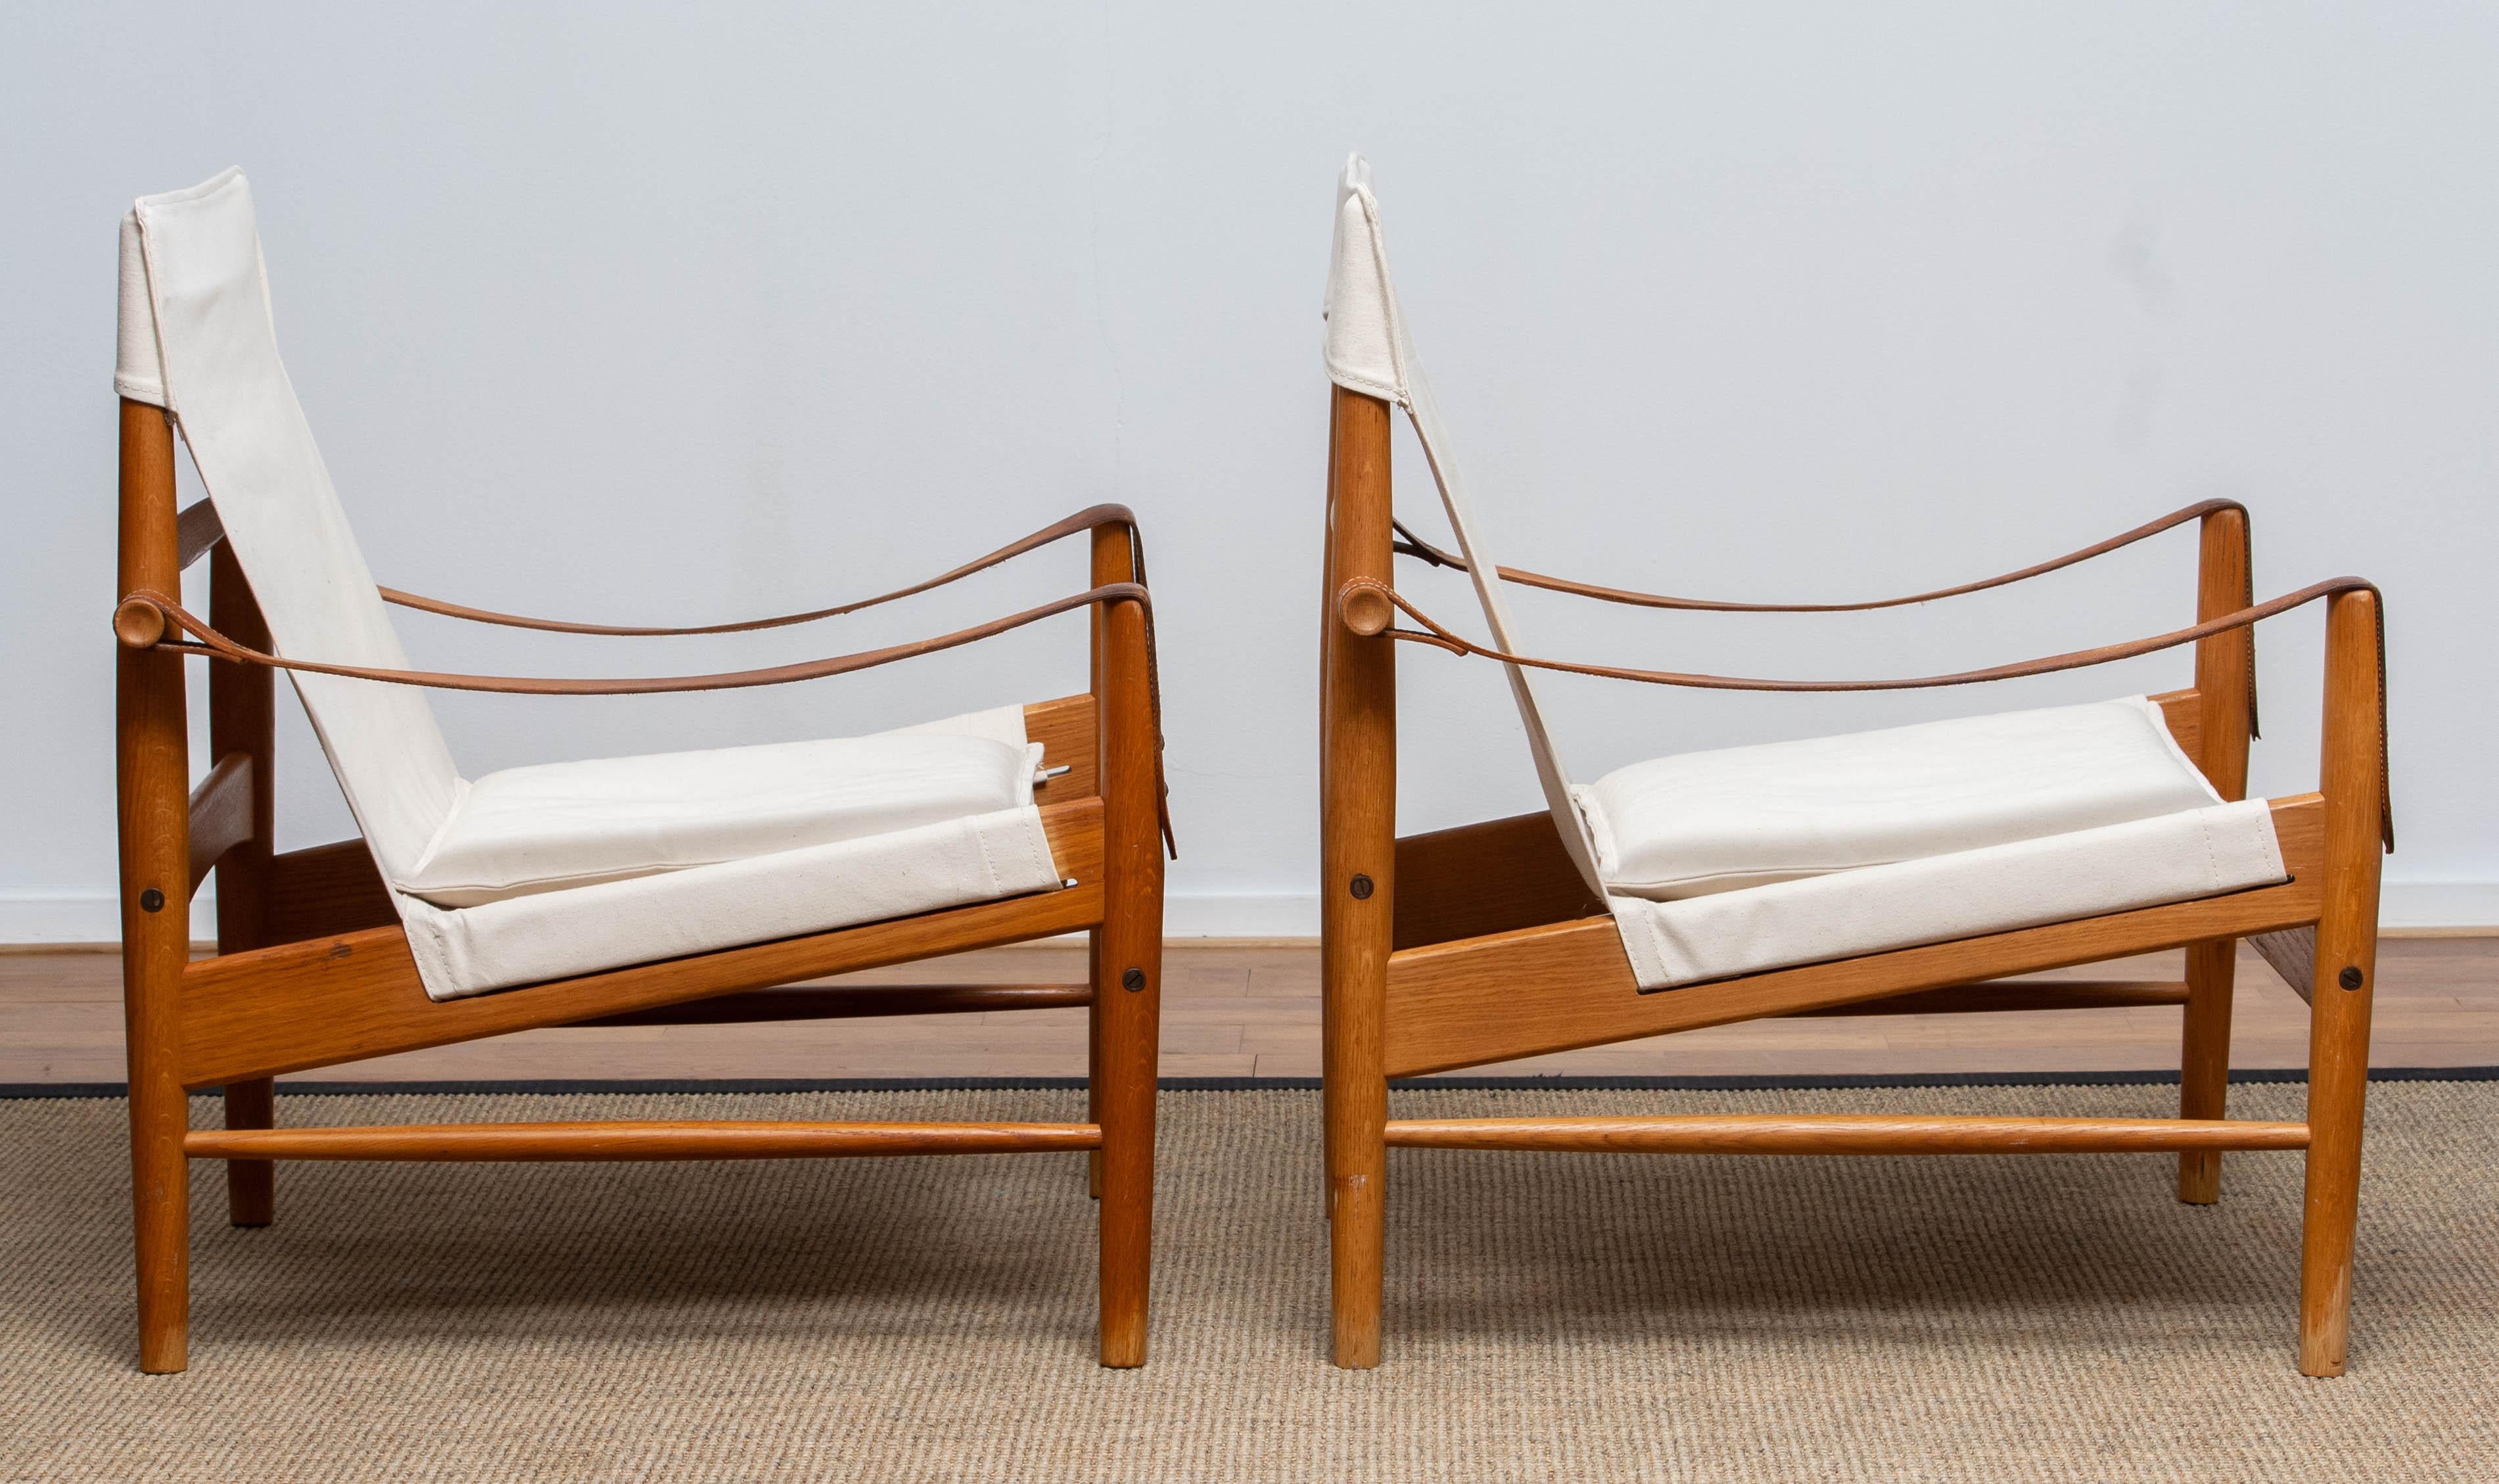 1960s, a Pair of Safari Chairs by Hans Olsen for Viska Möbler in Kinna, Sweden 1